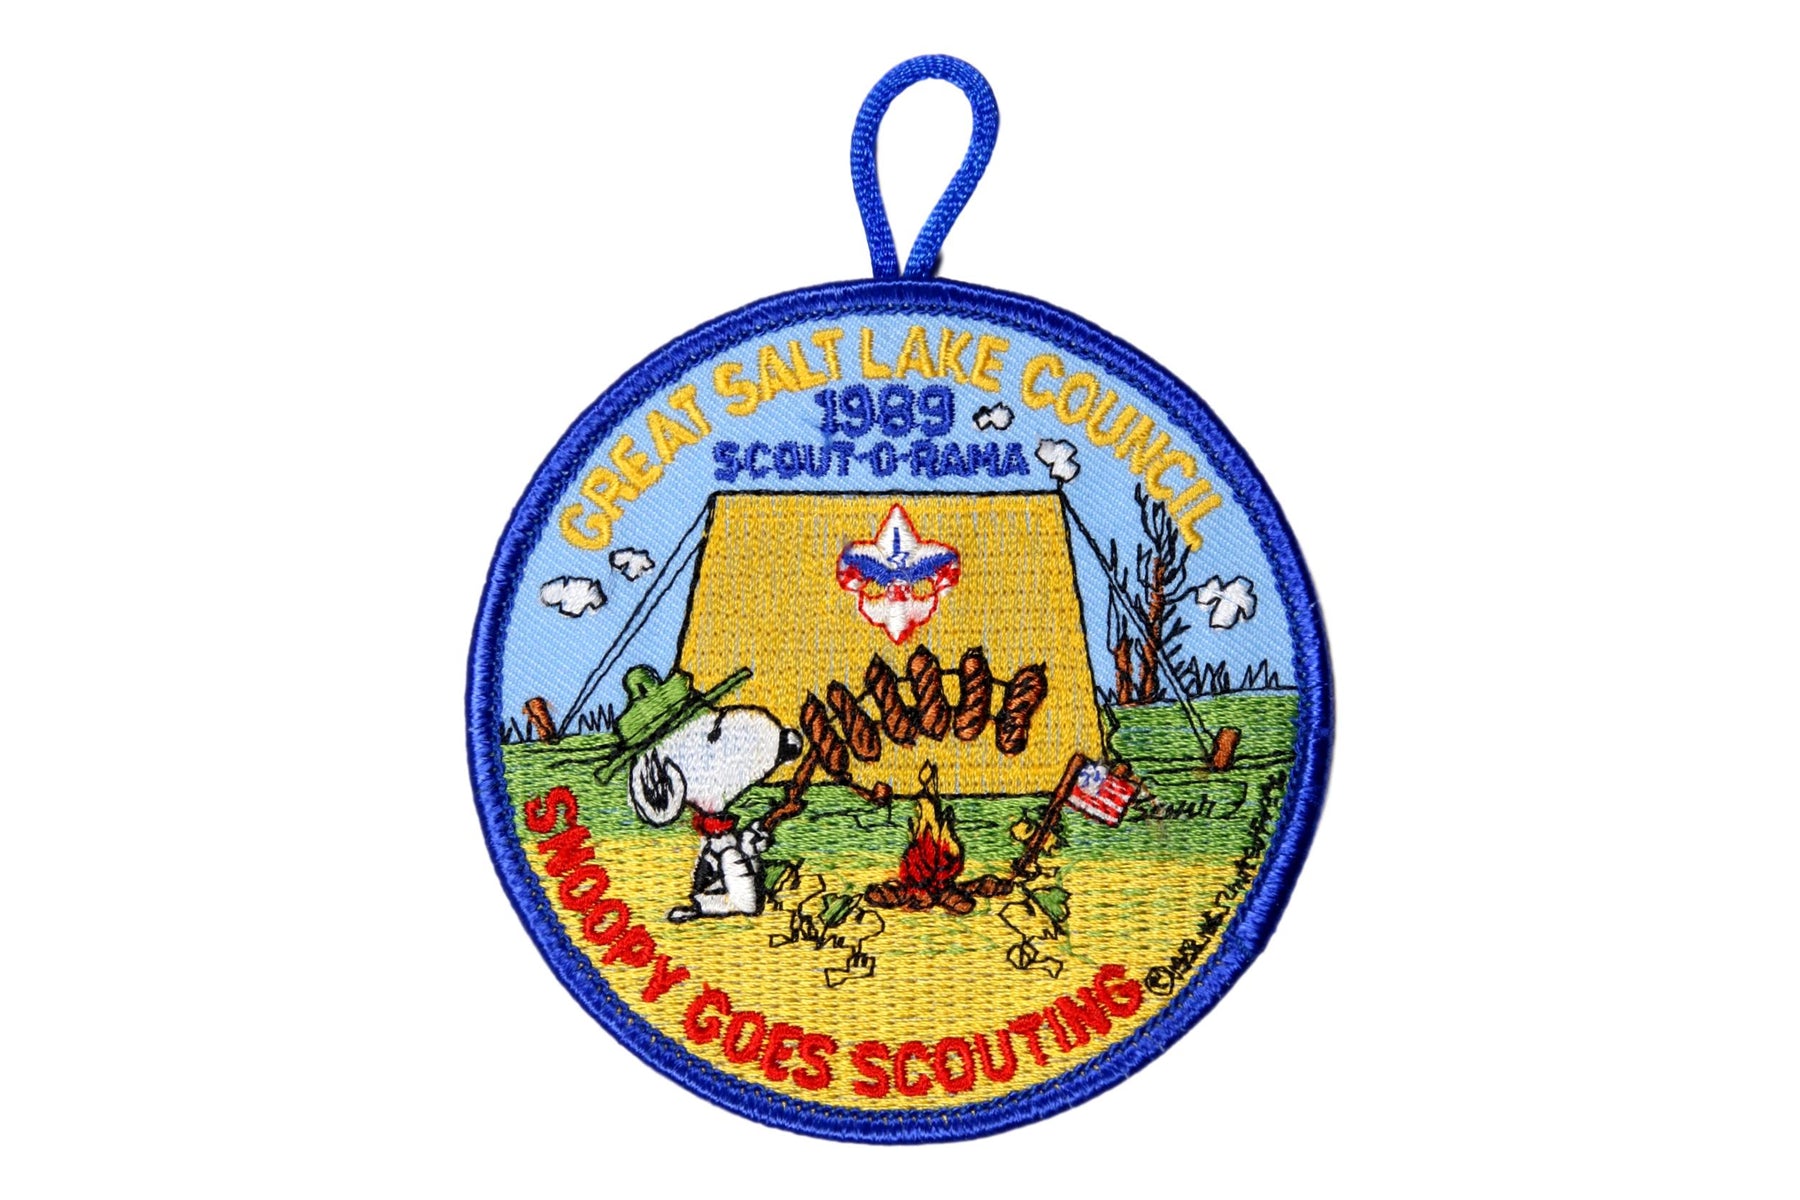 1989 Great Salt Lake Scout O Rama Patch